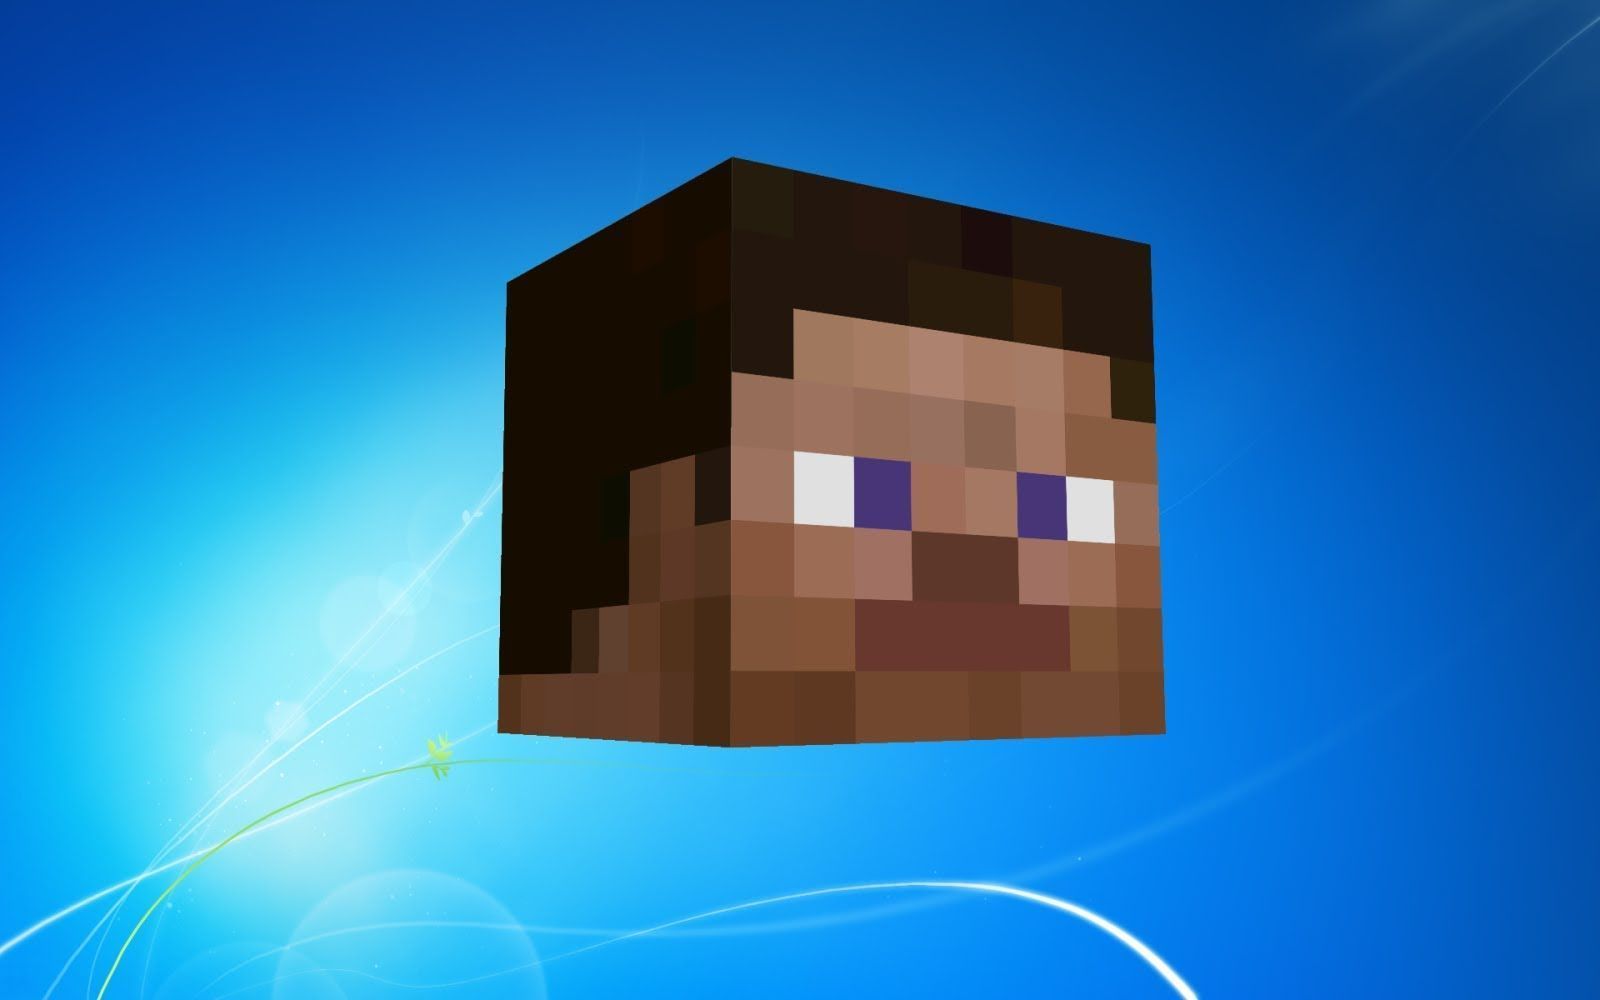 Steve_Minecraft_Wallpaper_1600x1000.jpg